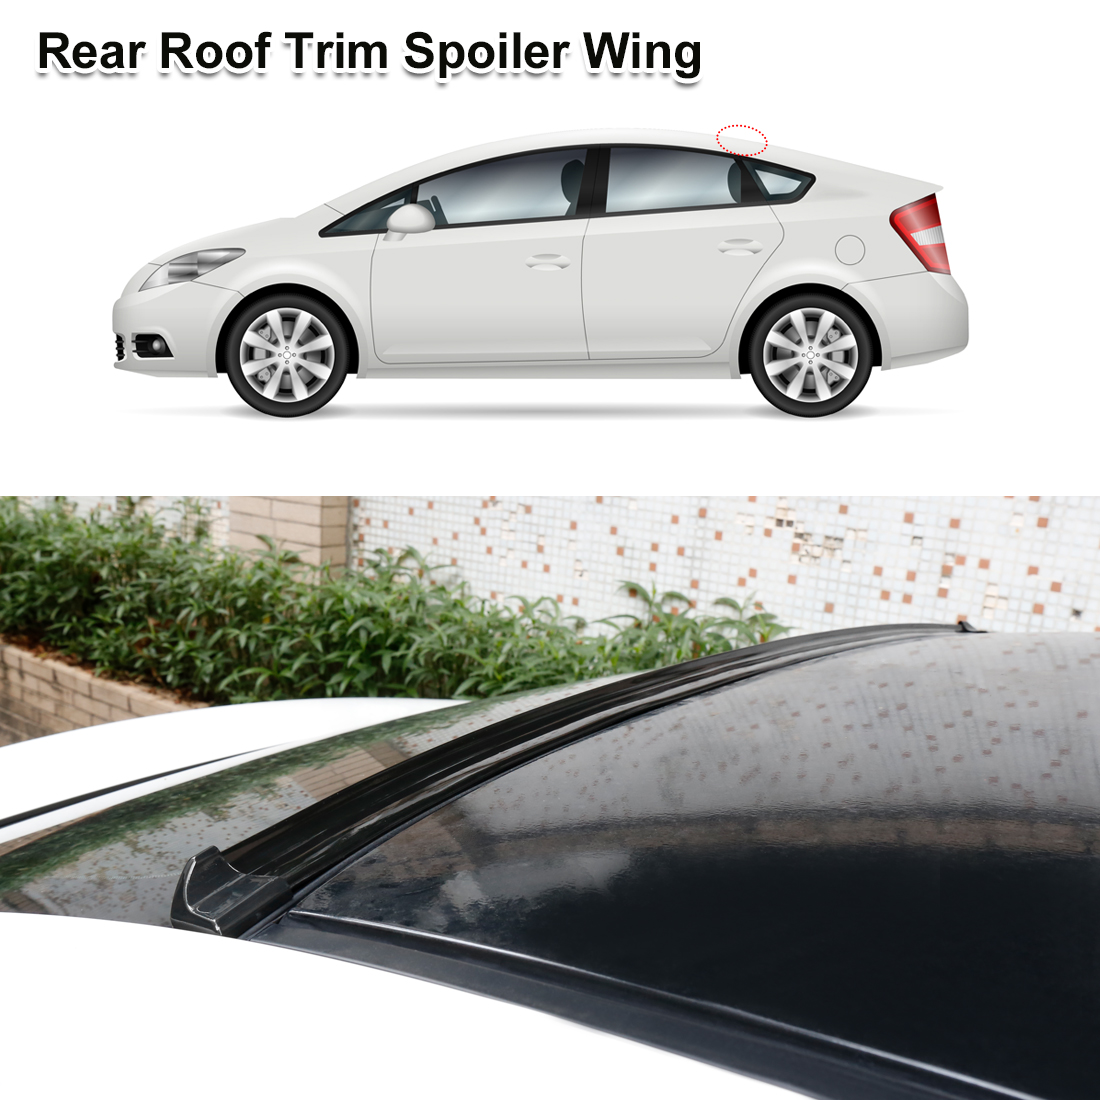 Unique Bargains 59" Car Rear Spoiler Wing Rubber Lip Tail Trunk Roof Trim Sticker Glossy Black